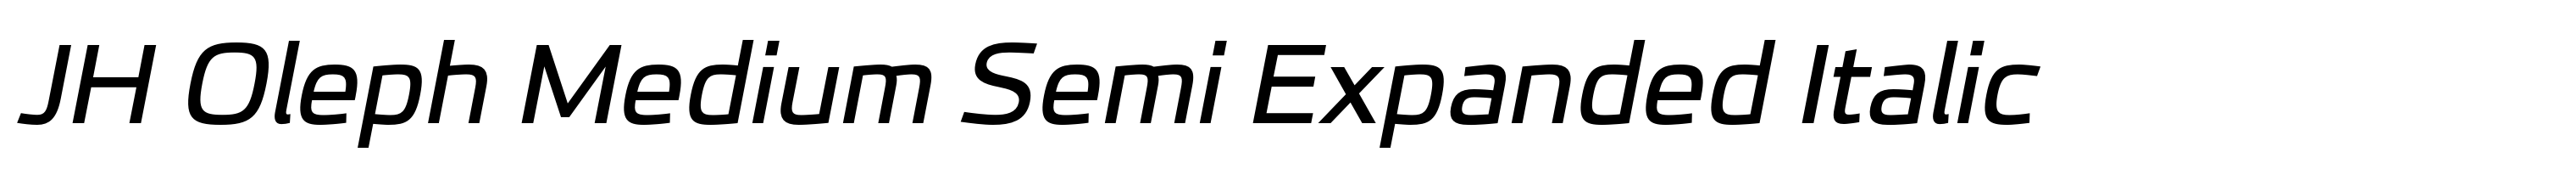 JH Oleph Medium Semi Expanded Italic